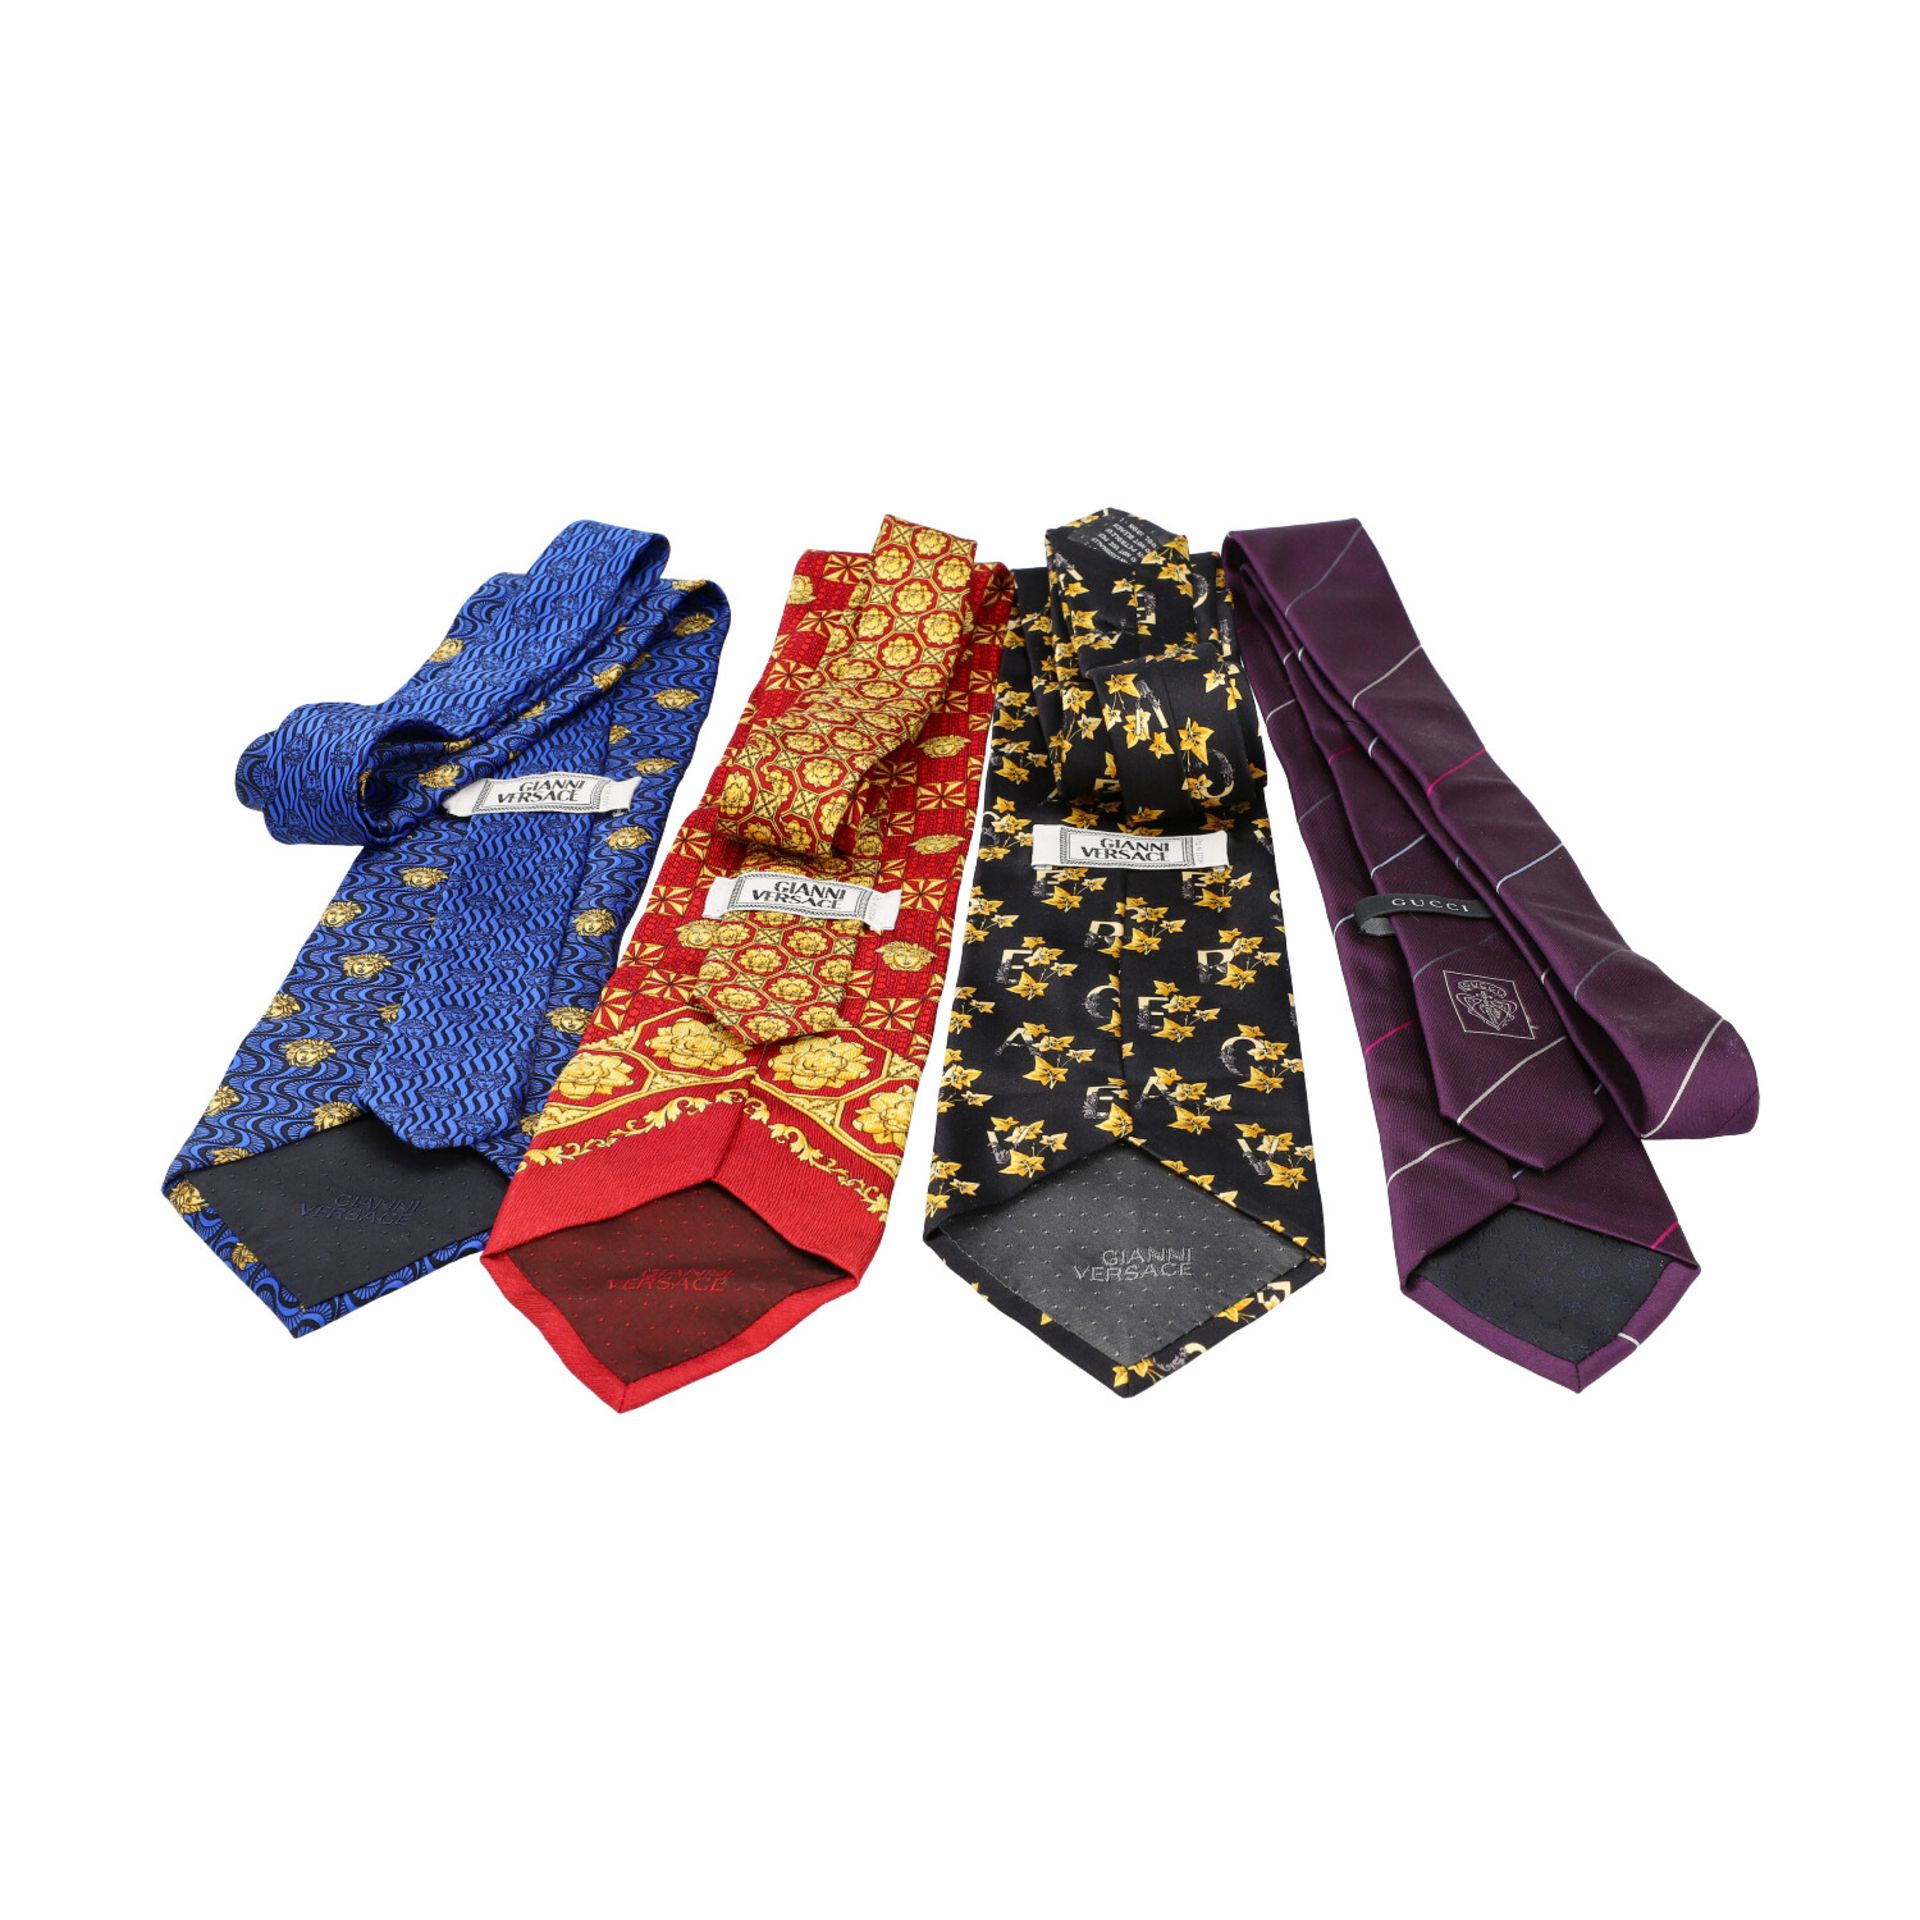 Vintage Krawatten-Konvolut.Konvolut bestehend aus 3x VERSACE und 1x GUCCI Seidenkrawat - Bild 2 aus 2